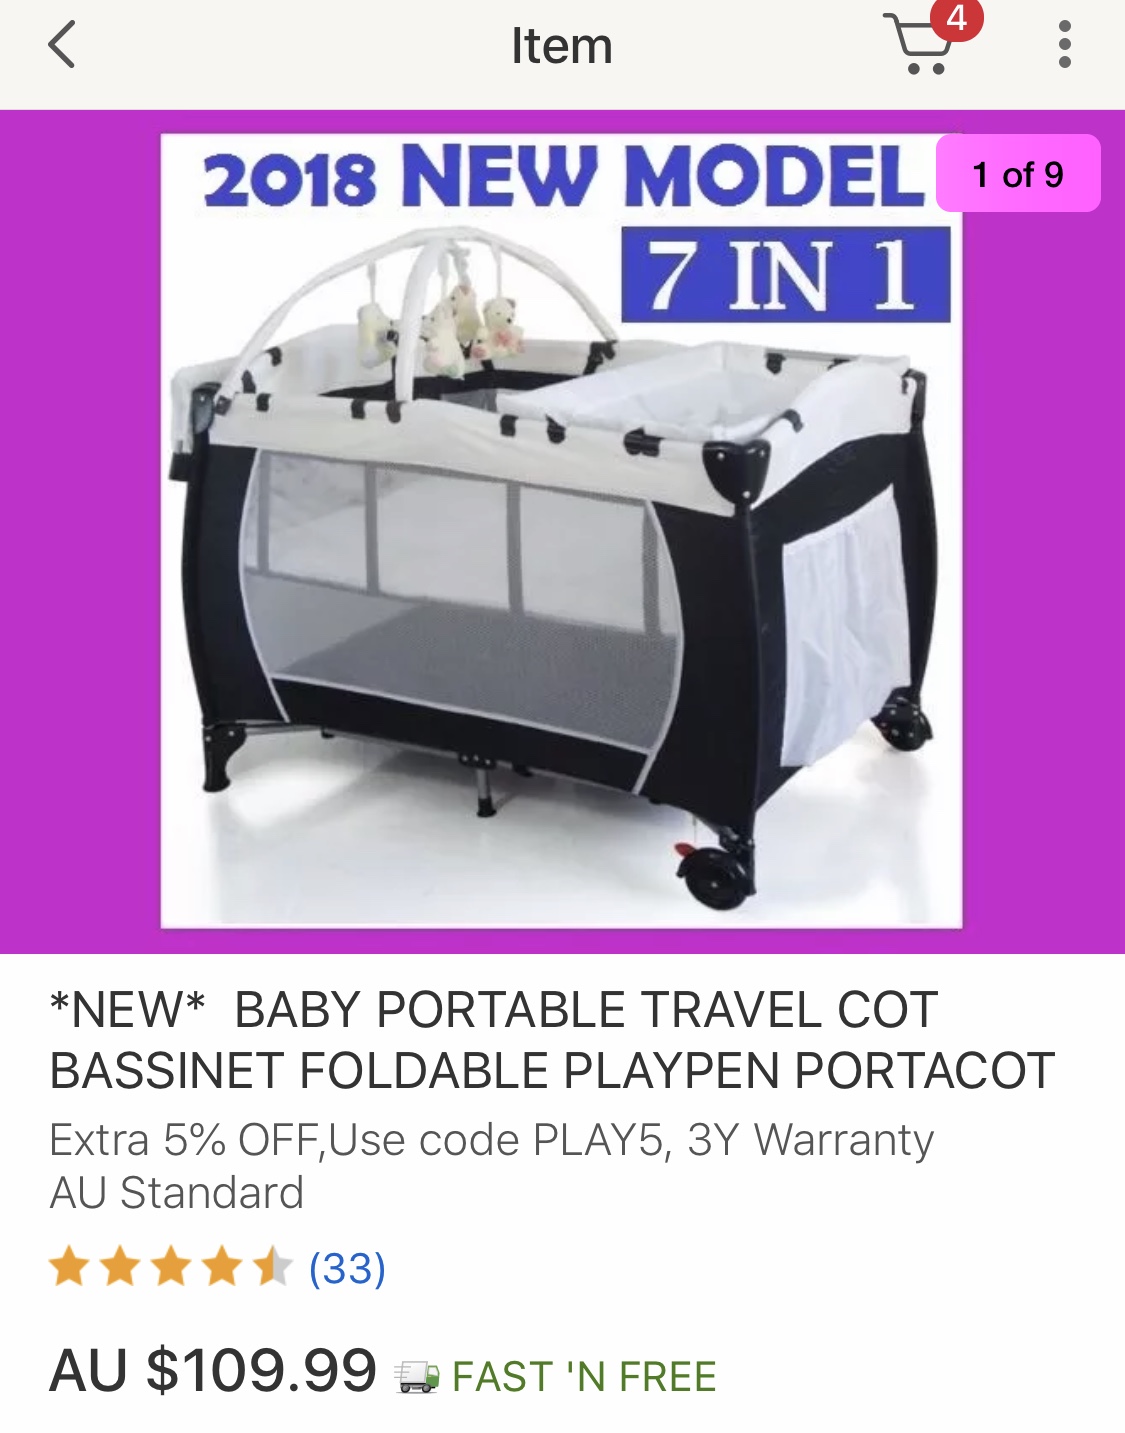 Baby portable travel cot bassinet foldable playpen portacot